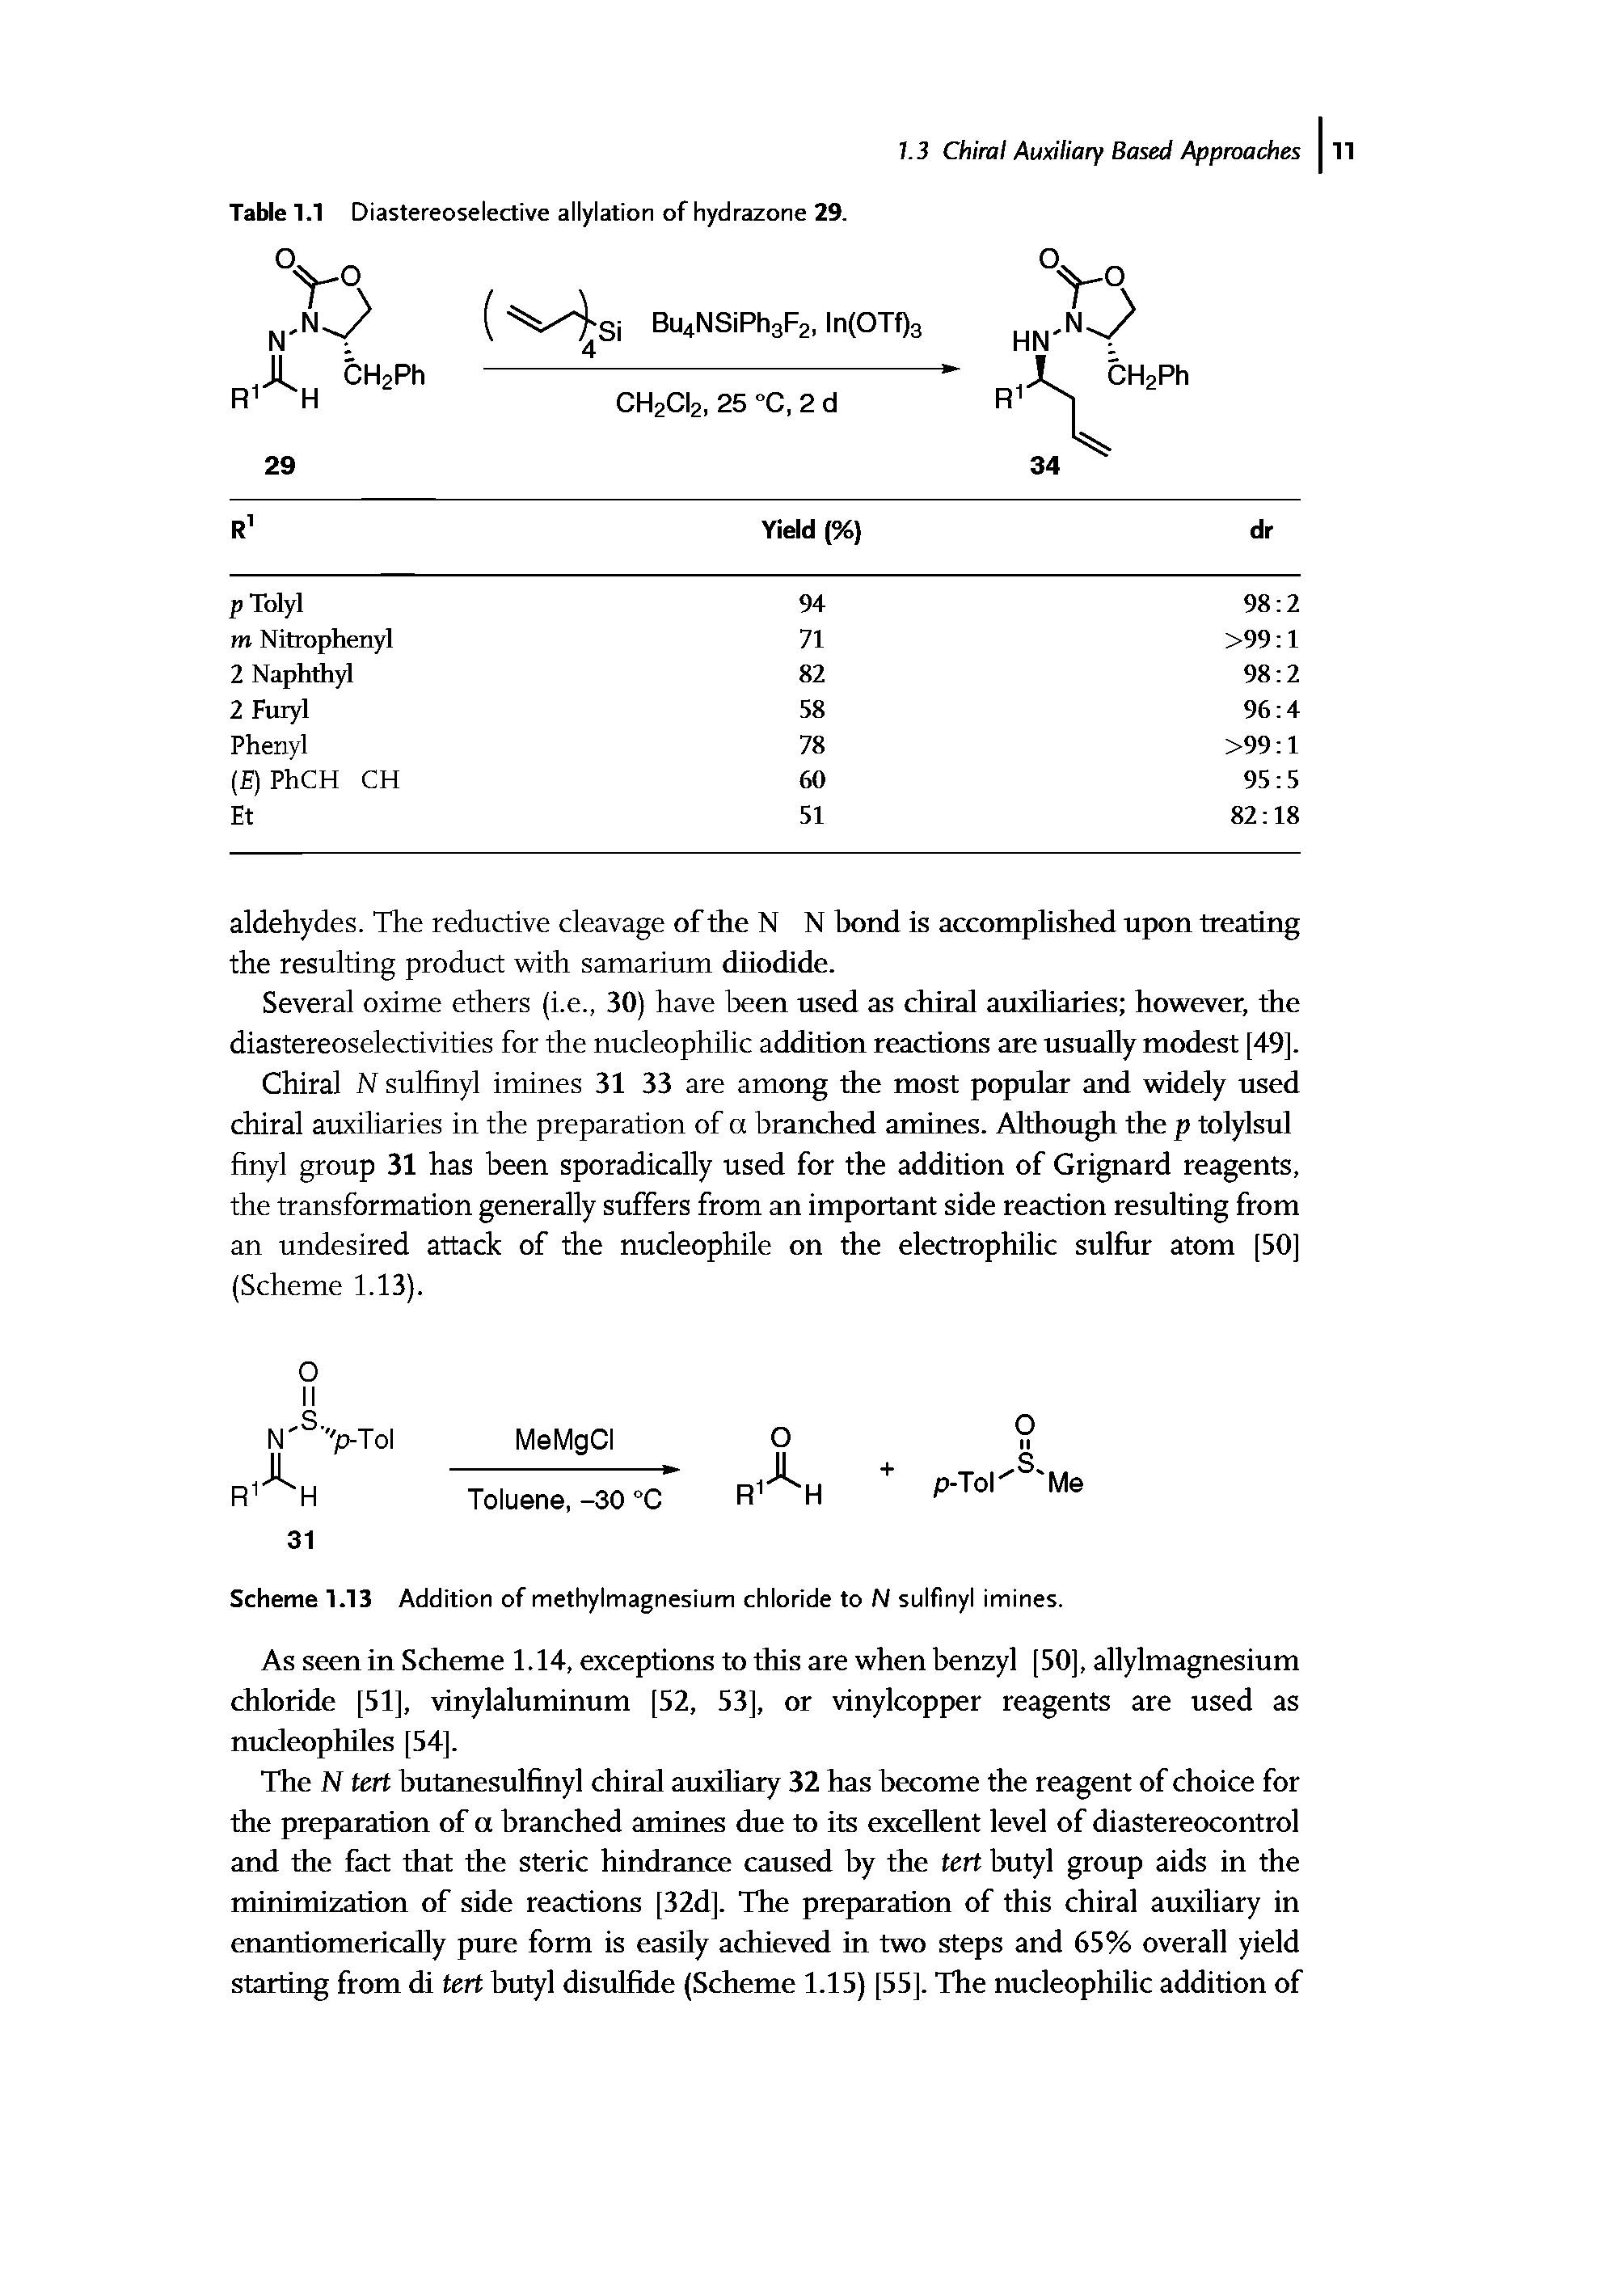 Scheme 1.13 Addition of methylmagnesium chloride to N sulfinyl imines.